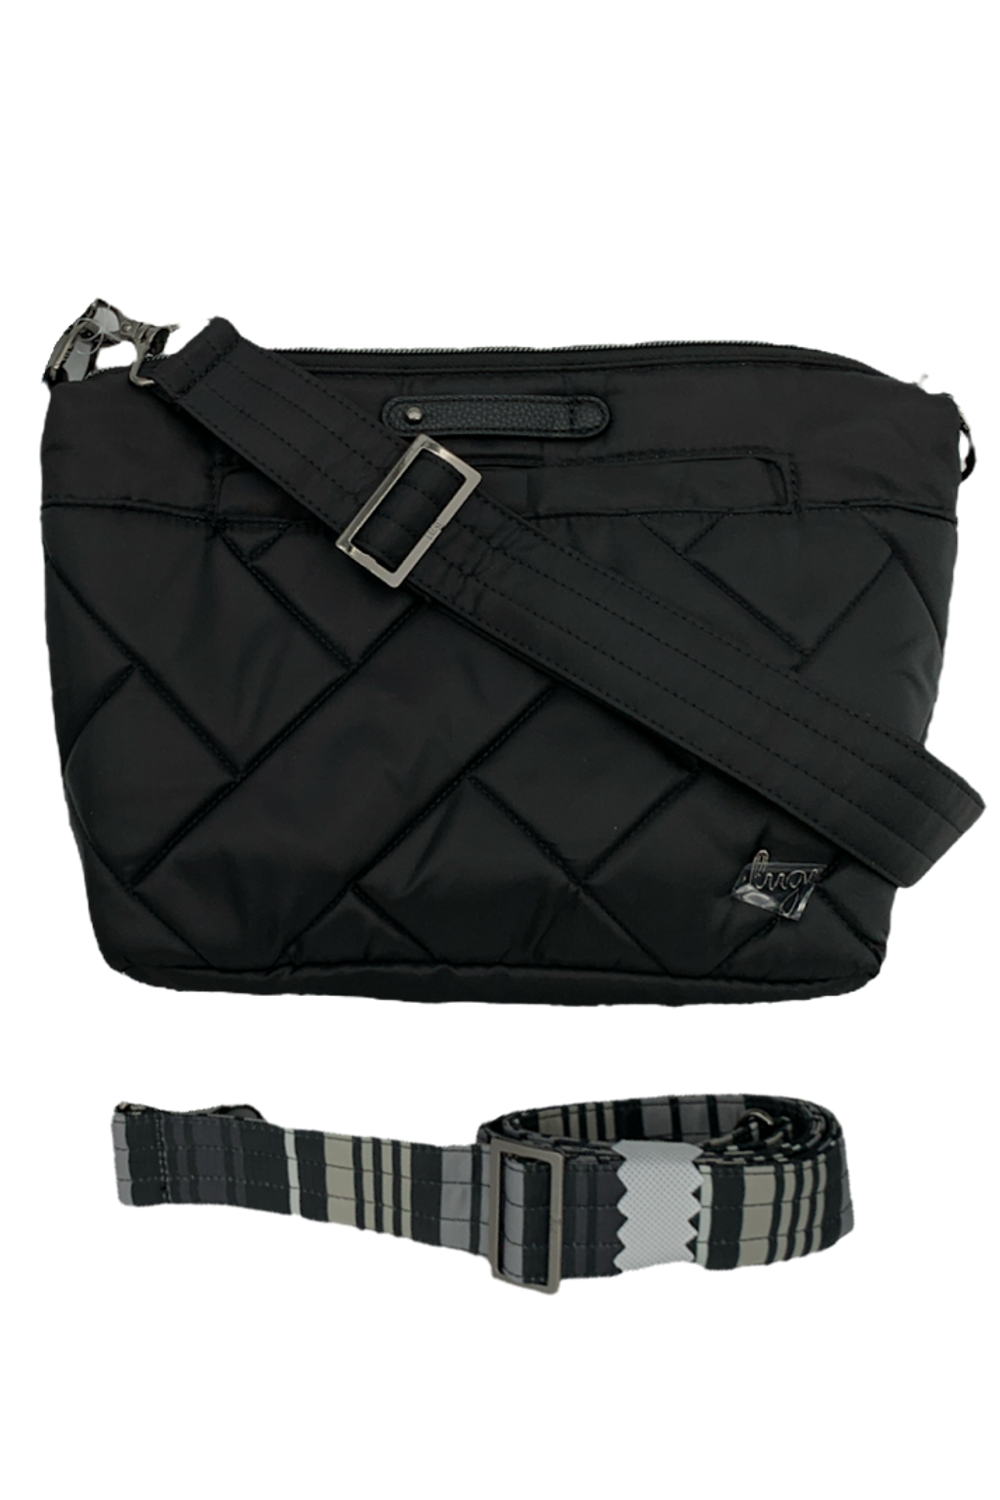 Think Royln Convertible Multi Strap Nylon Crossbody - Bar Bag